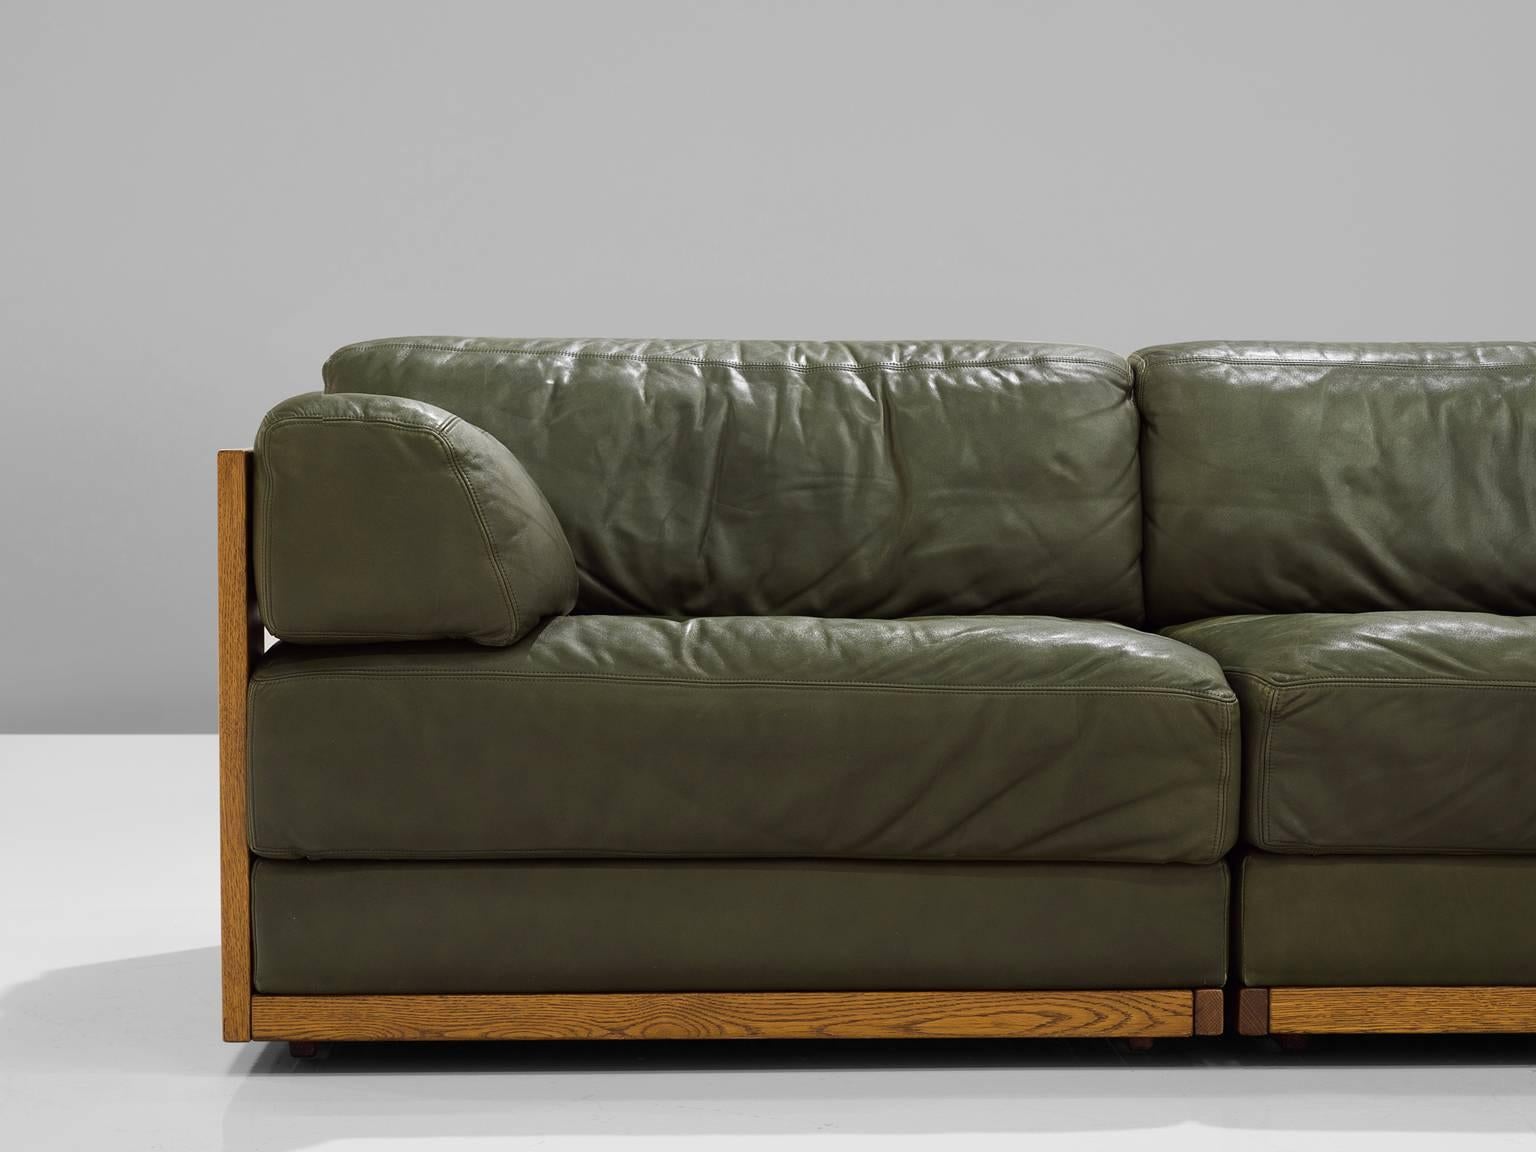 dark green leather sectional sofa